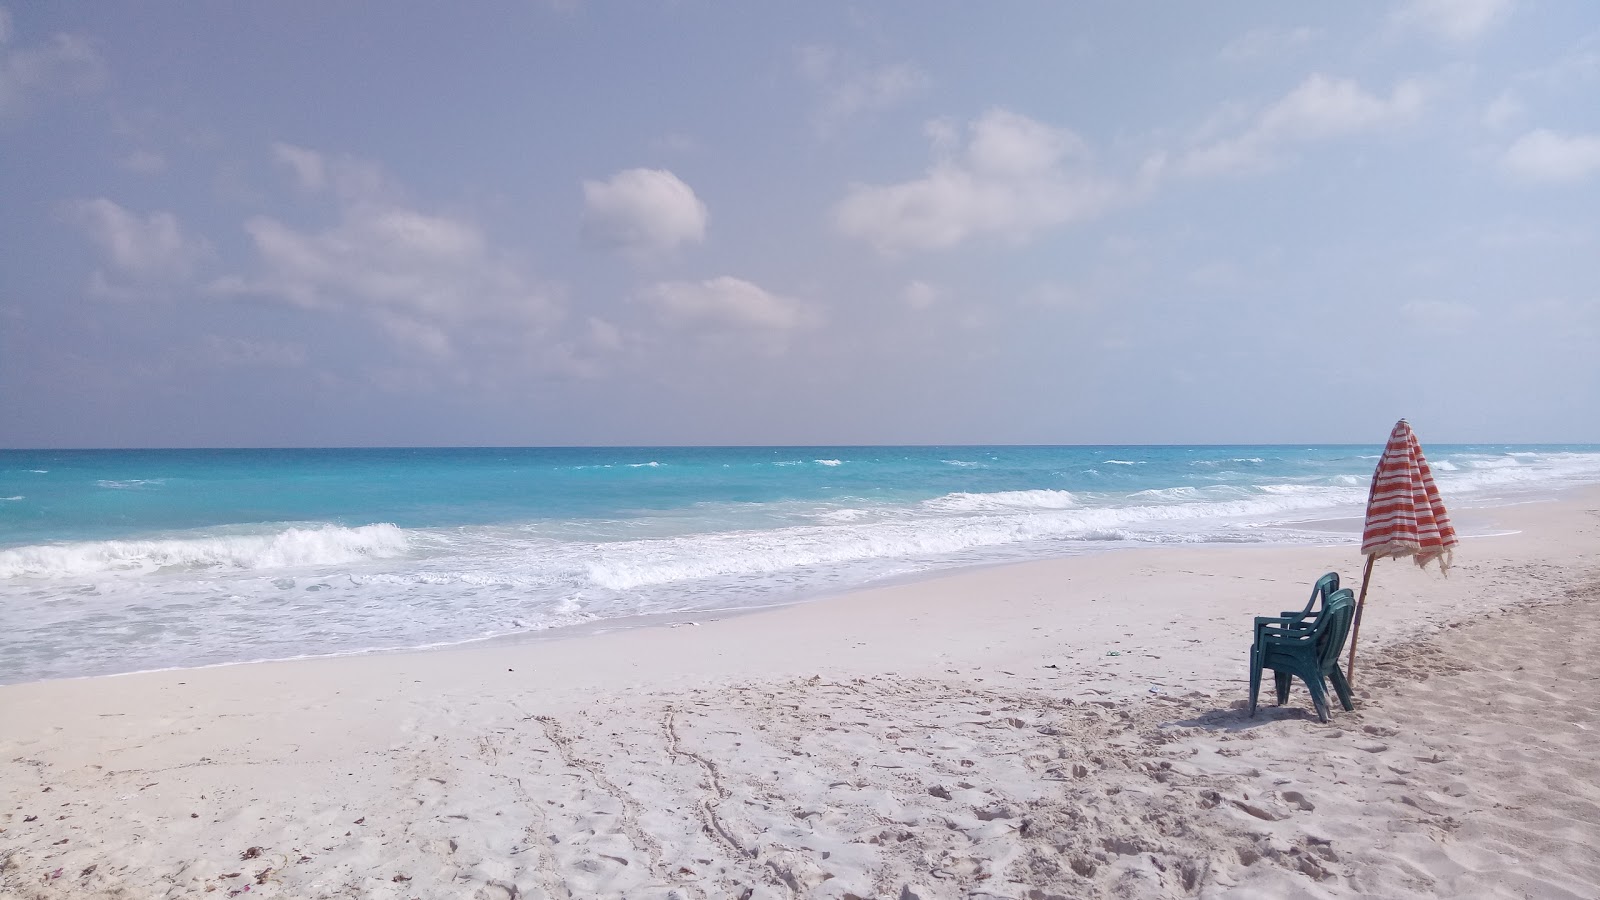 Fotografie cu Al Marwa Beach - locul popular printre cunoscătorii de relaxare